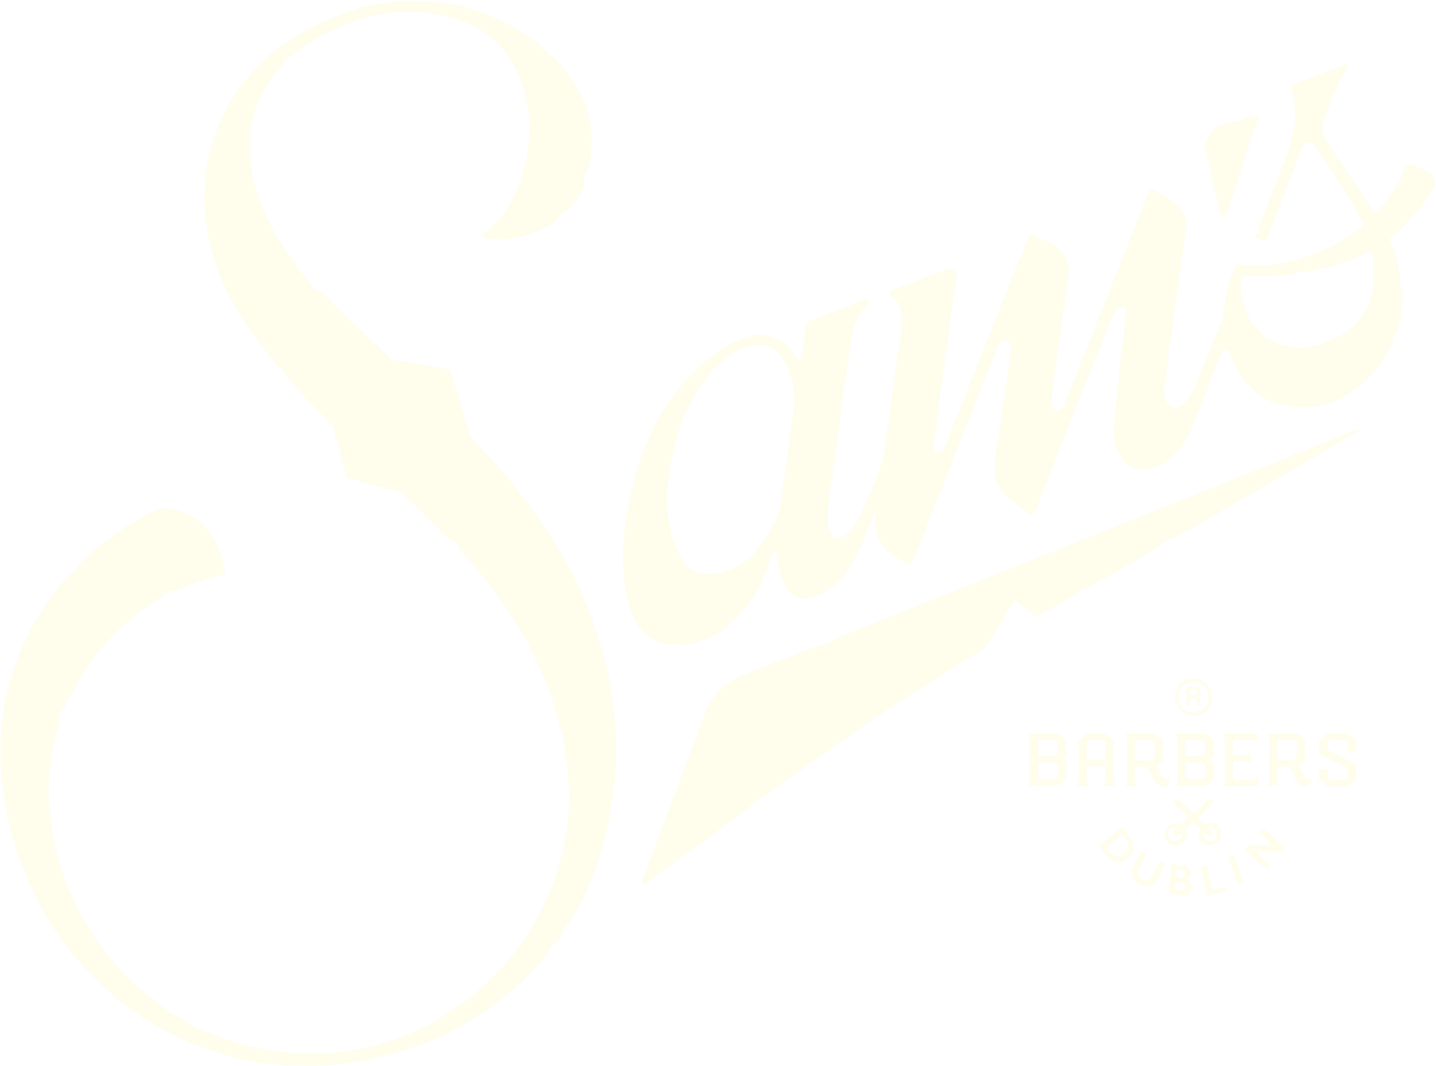 Sam's Barbers